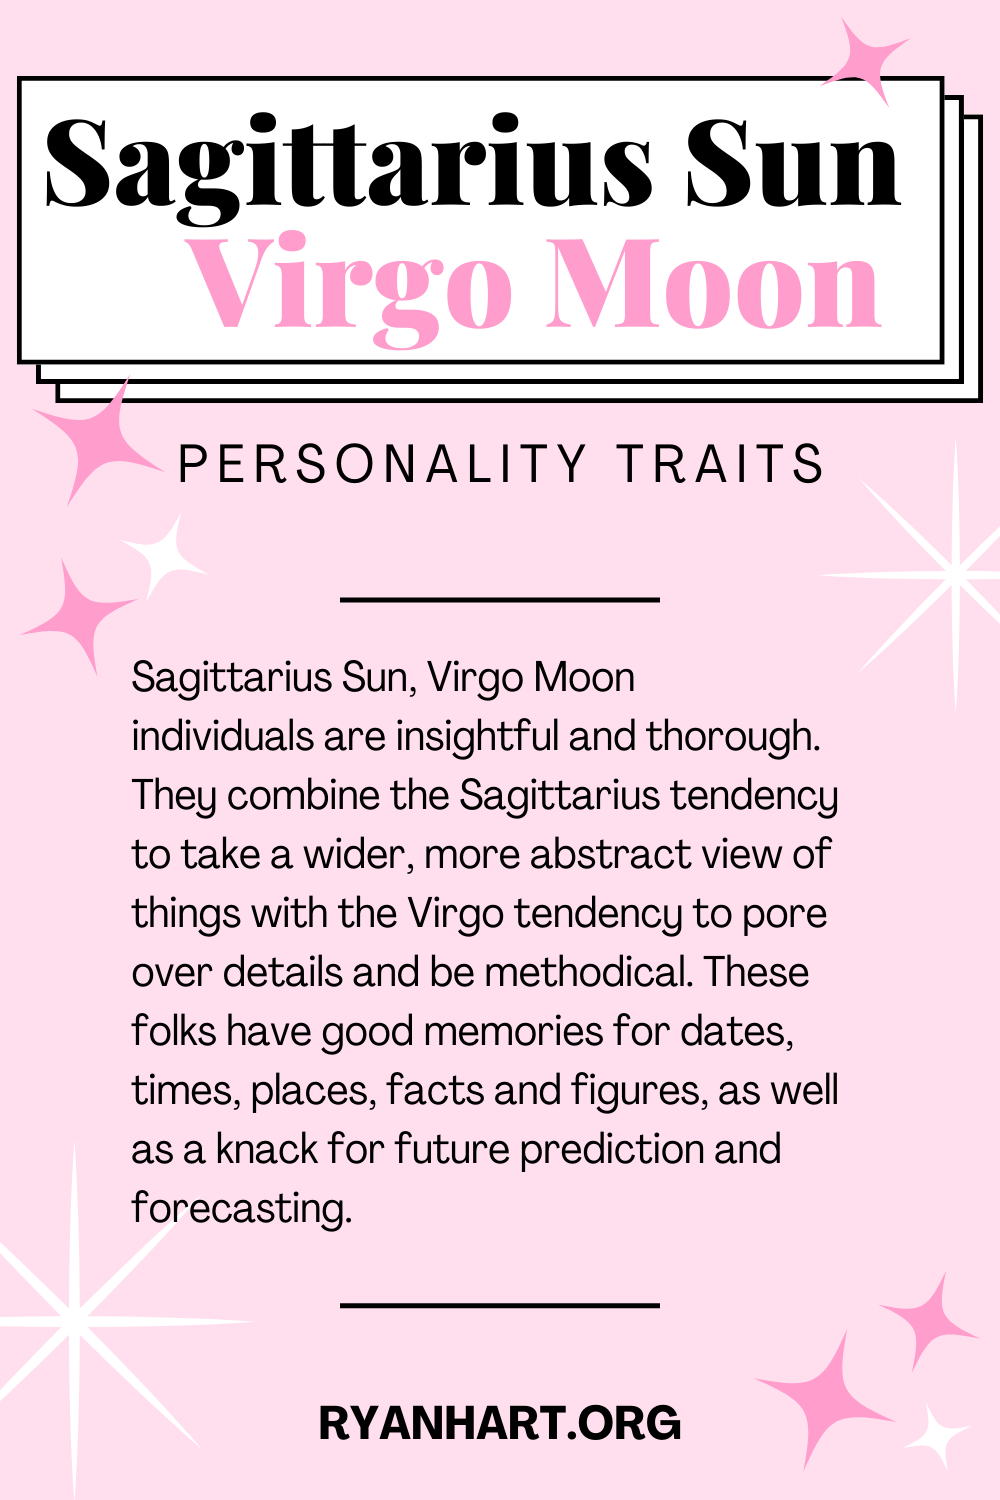 Sagittarius Sun Virgo Moon Description